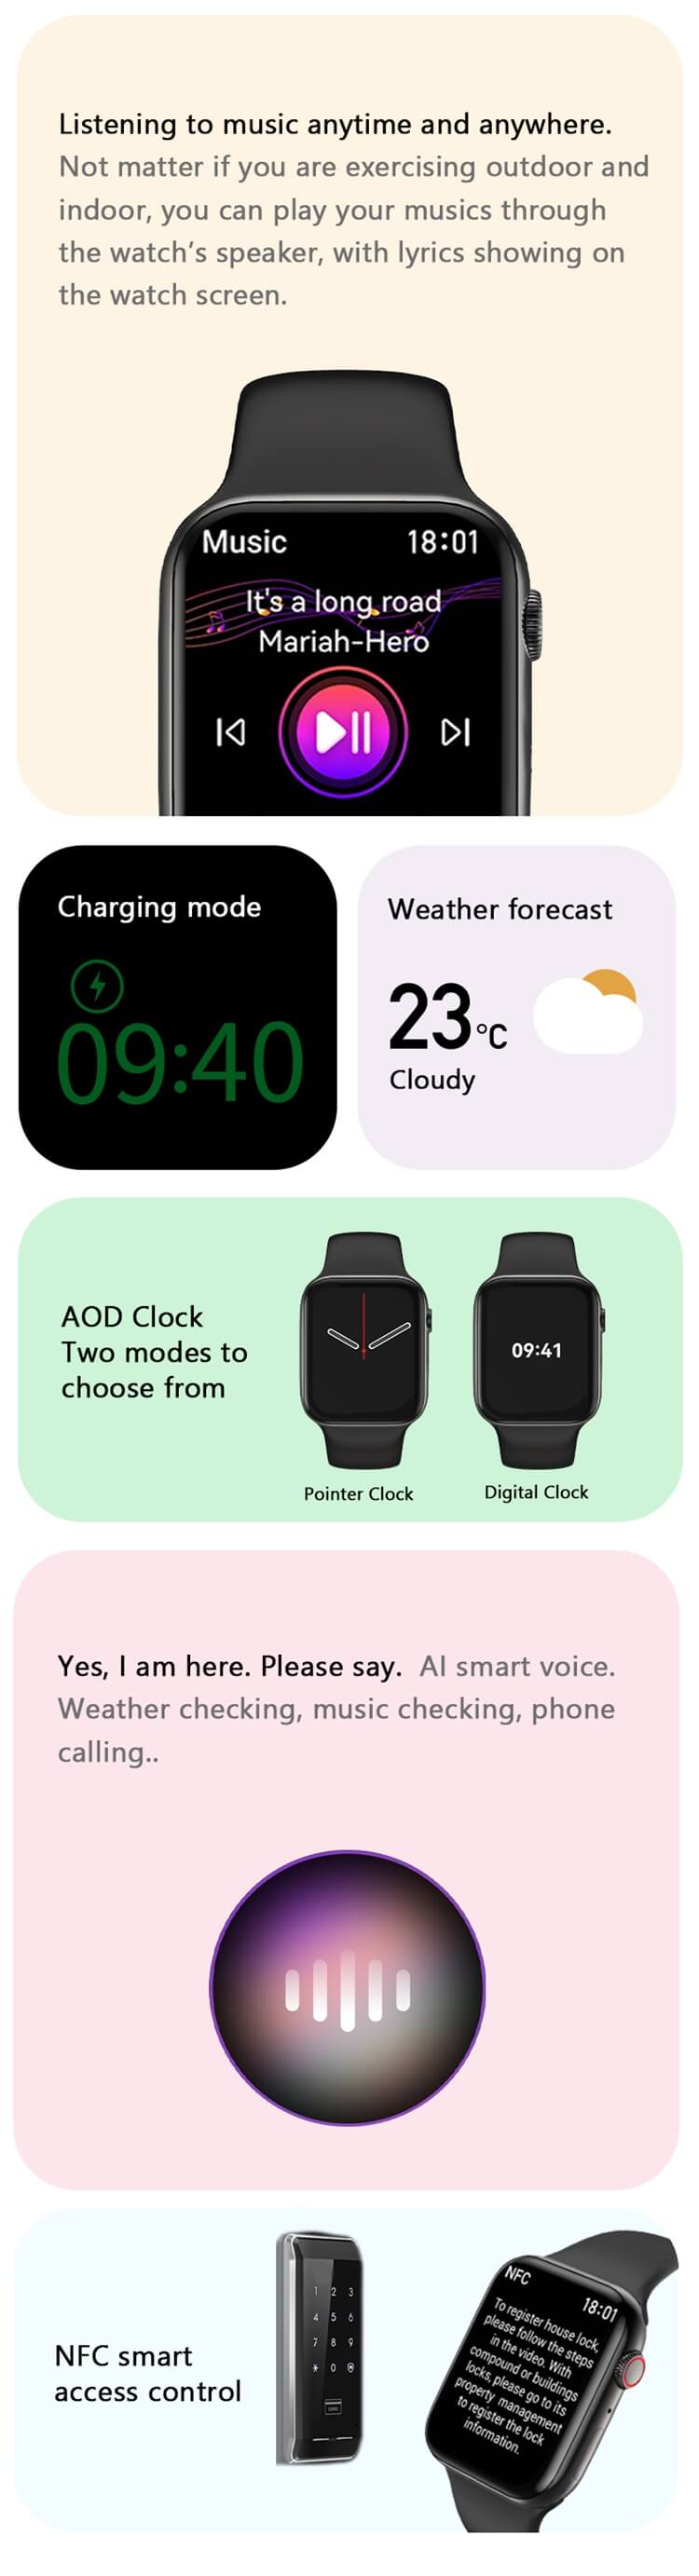 HD SE Smart Watch NFC Function-Shenzhen Shengye Technology Co.,Ltd